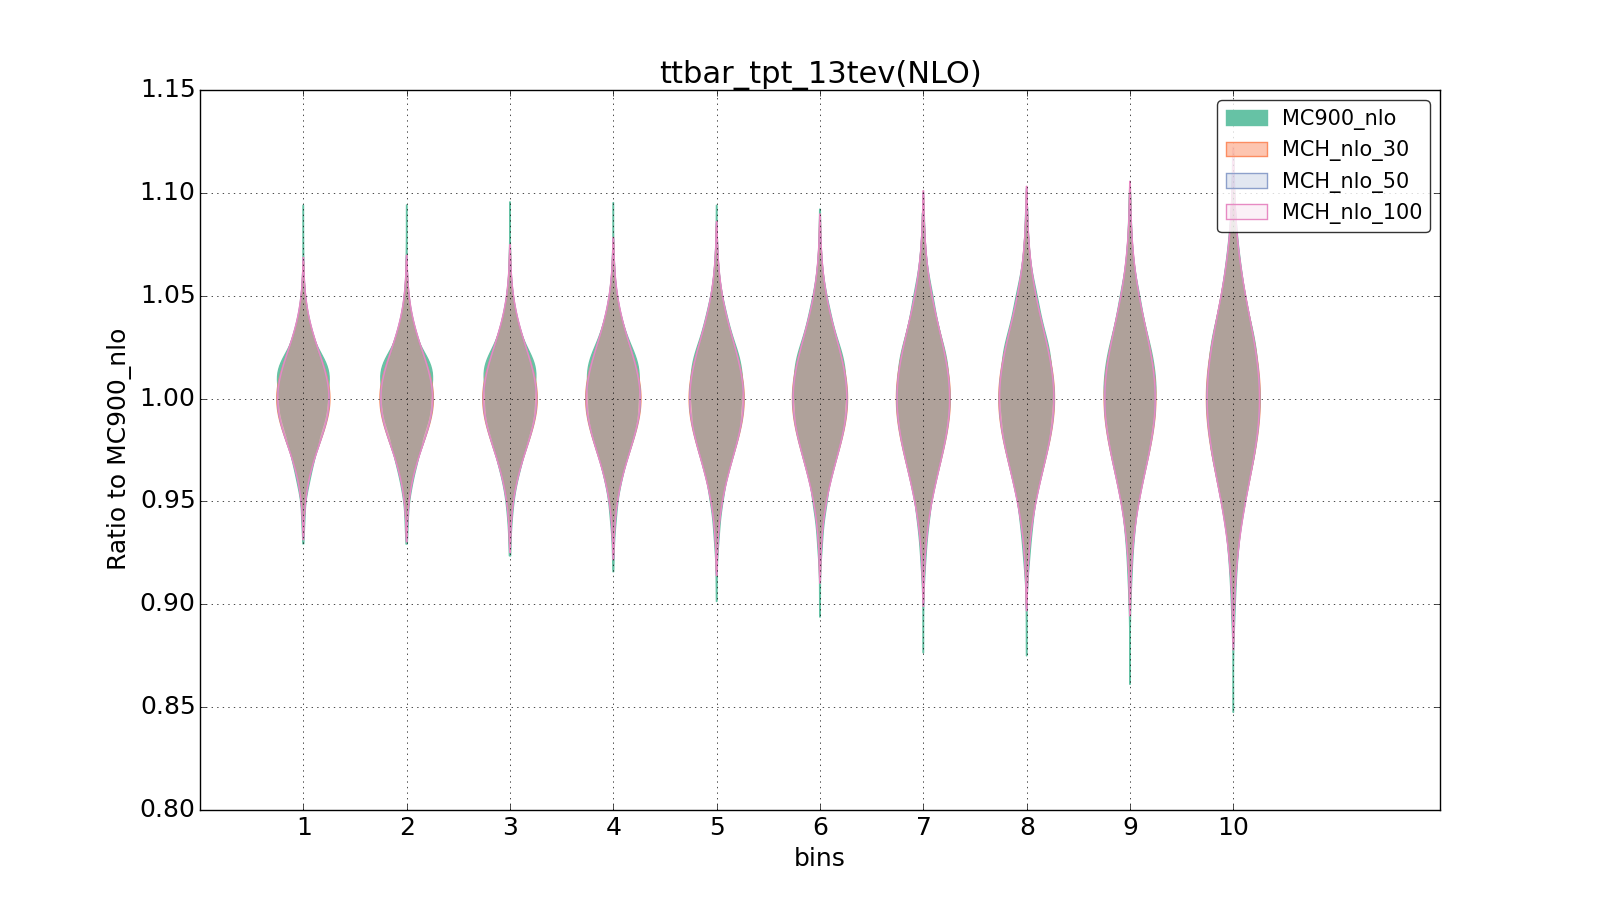 figure plots/pheno_new/NLO/violinplot_ttbar_tpt_13tev(NLO).png